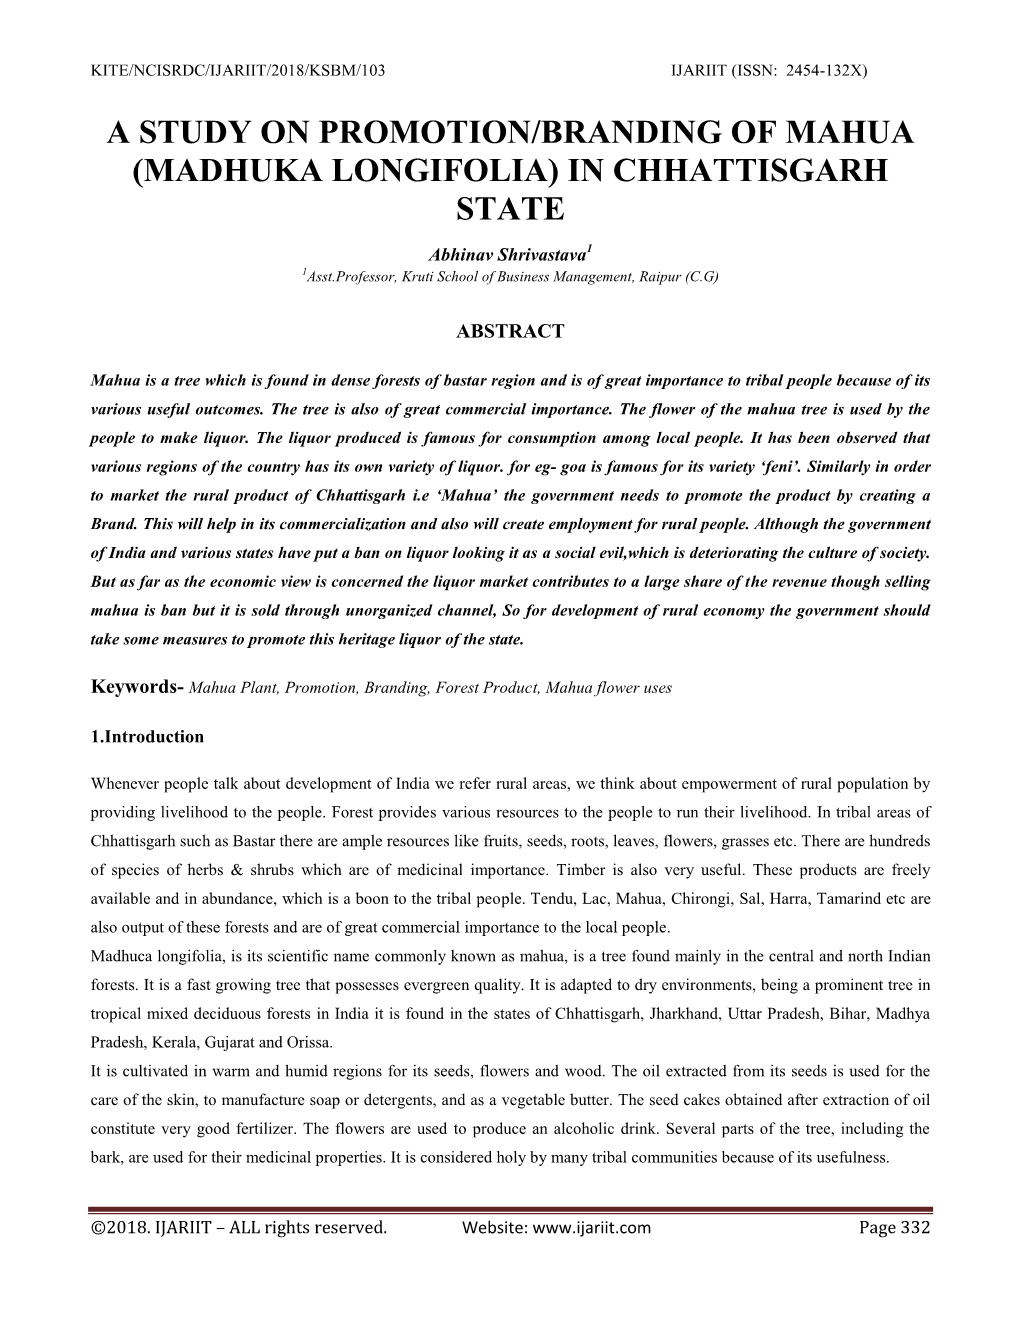 A Study on Promotion/Branding of Mahua (Madhuka Longifolia) in Chhattisgarh State